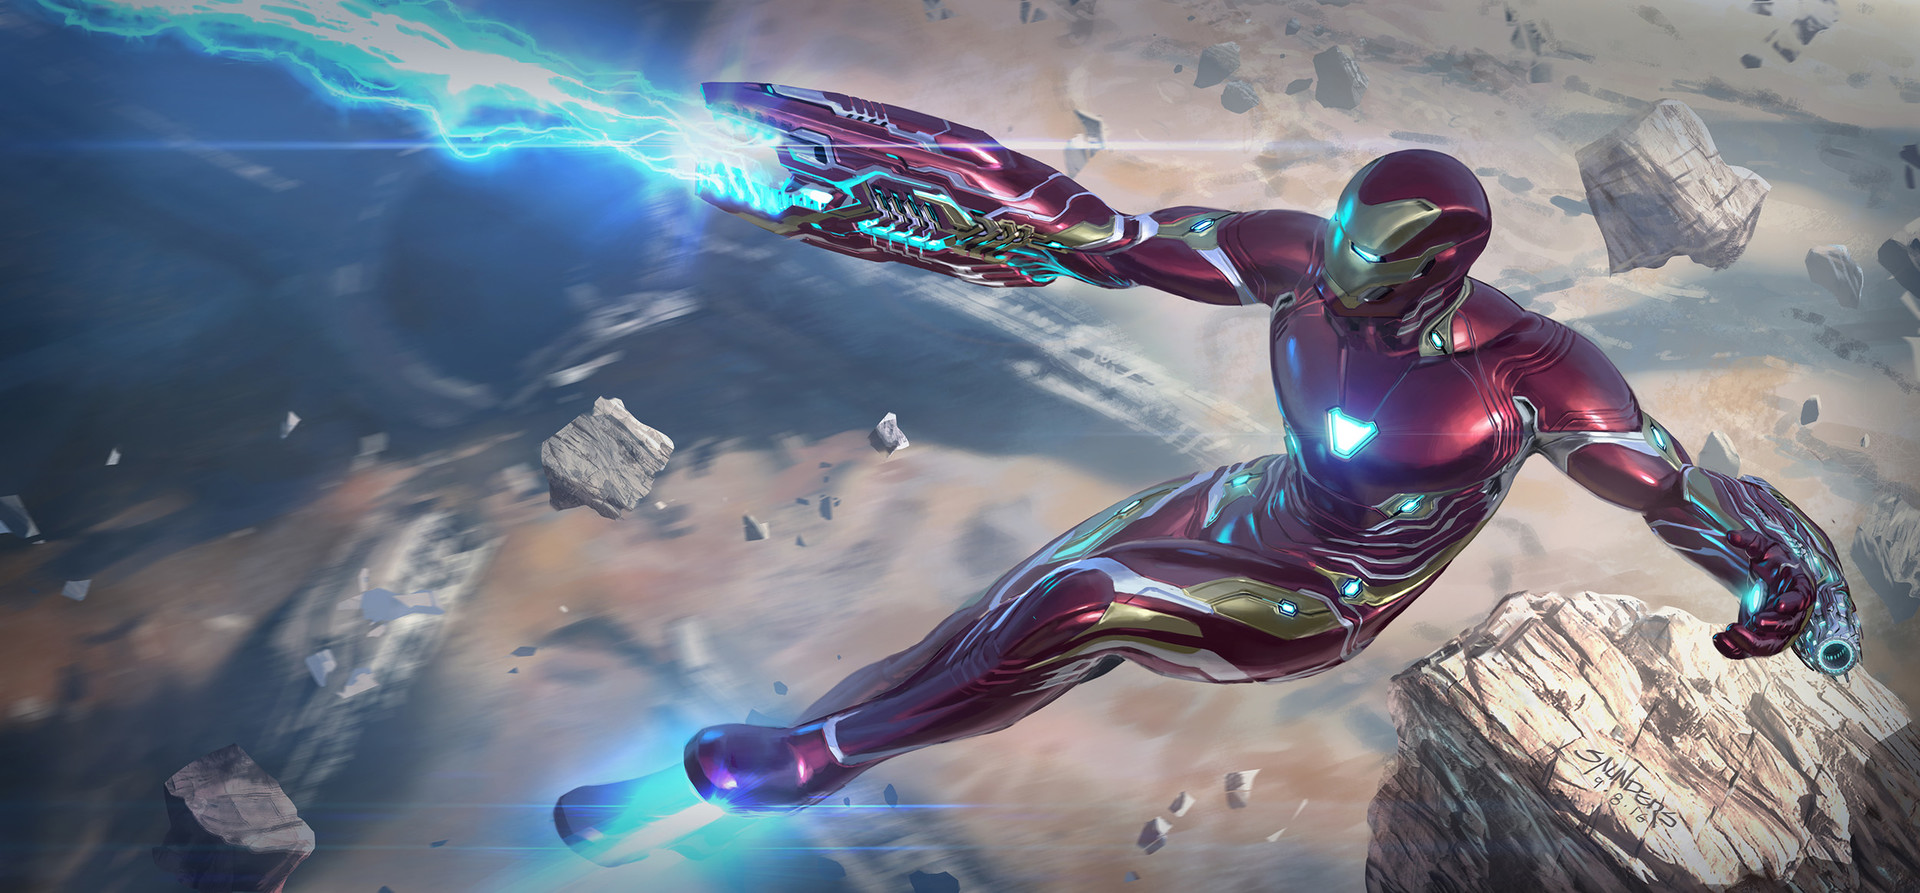 Avengers: Infinity War Art by Phil Saunders